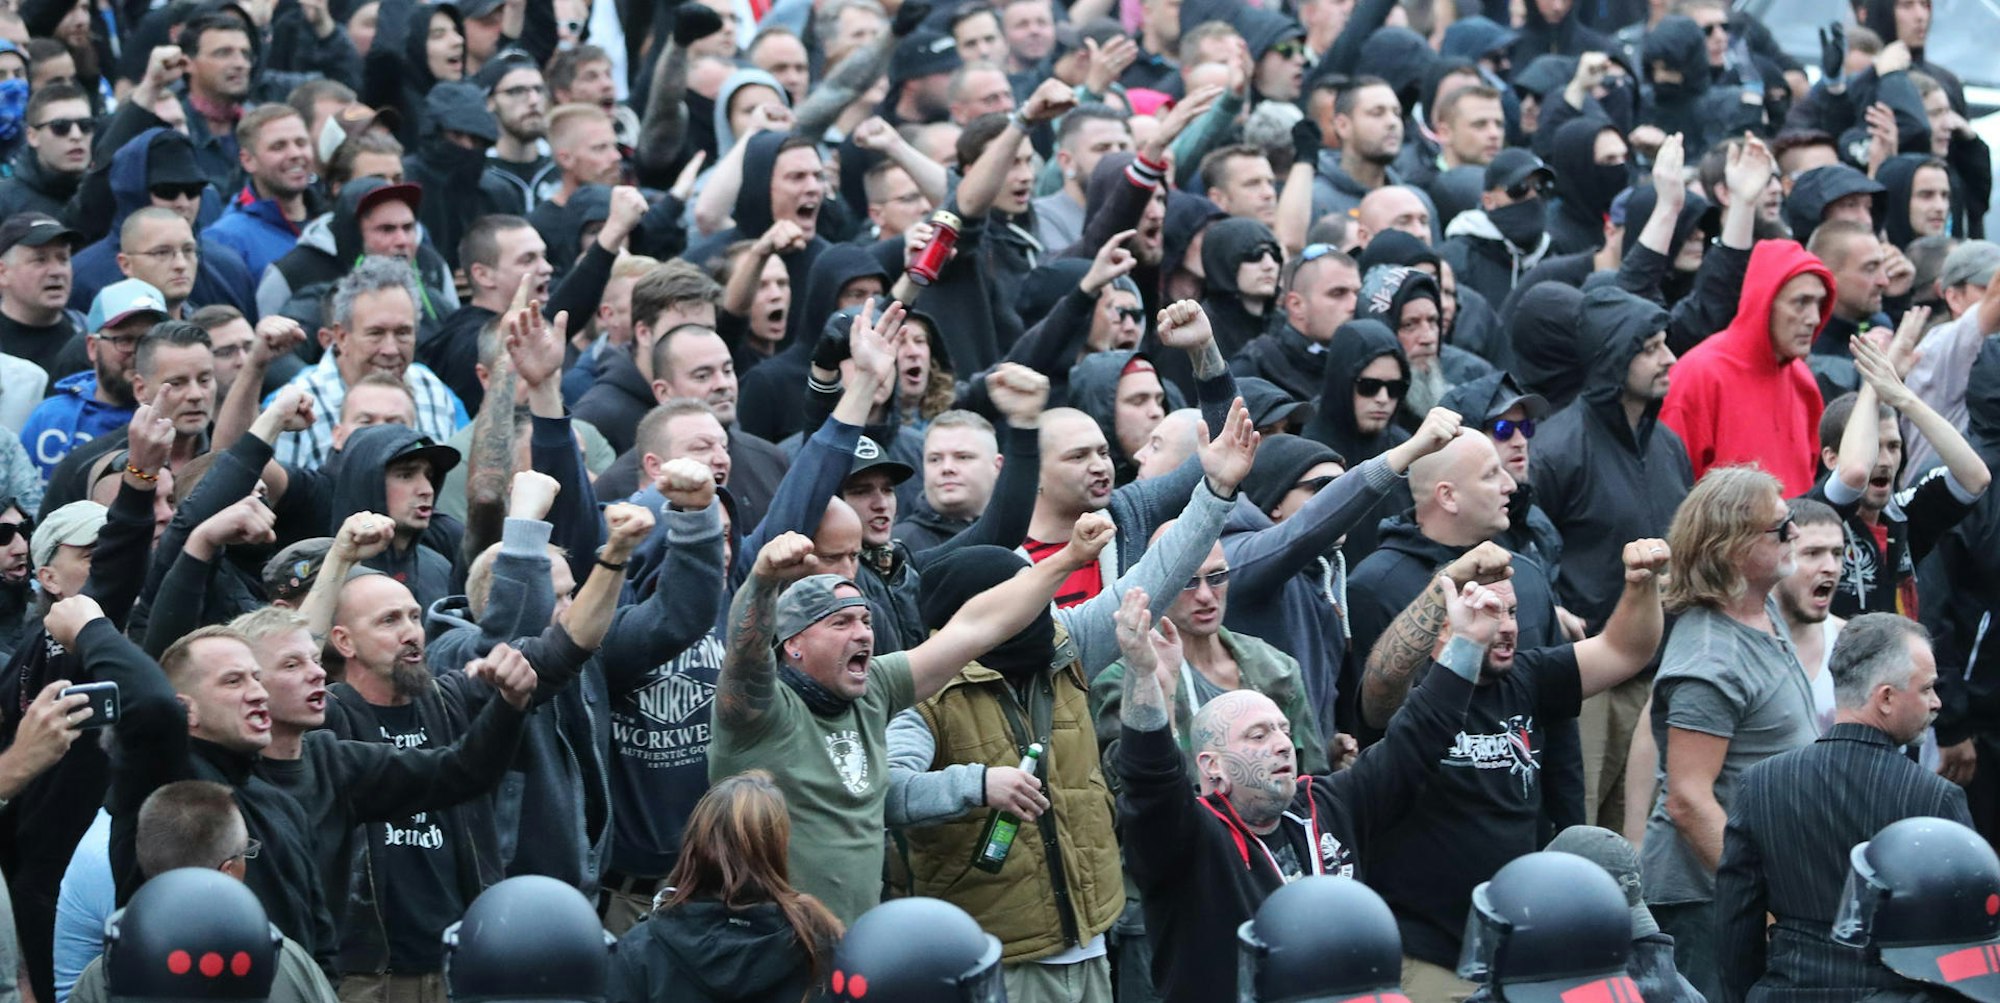 Nazis in Chemnitz